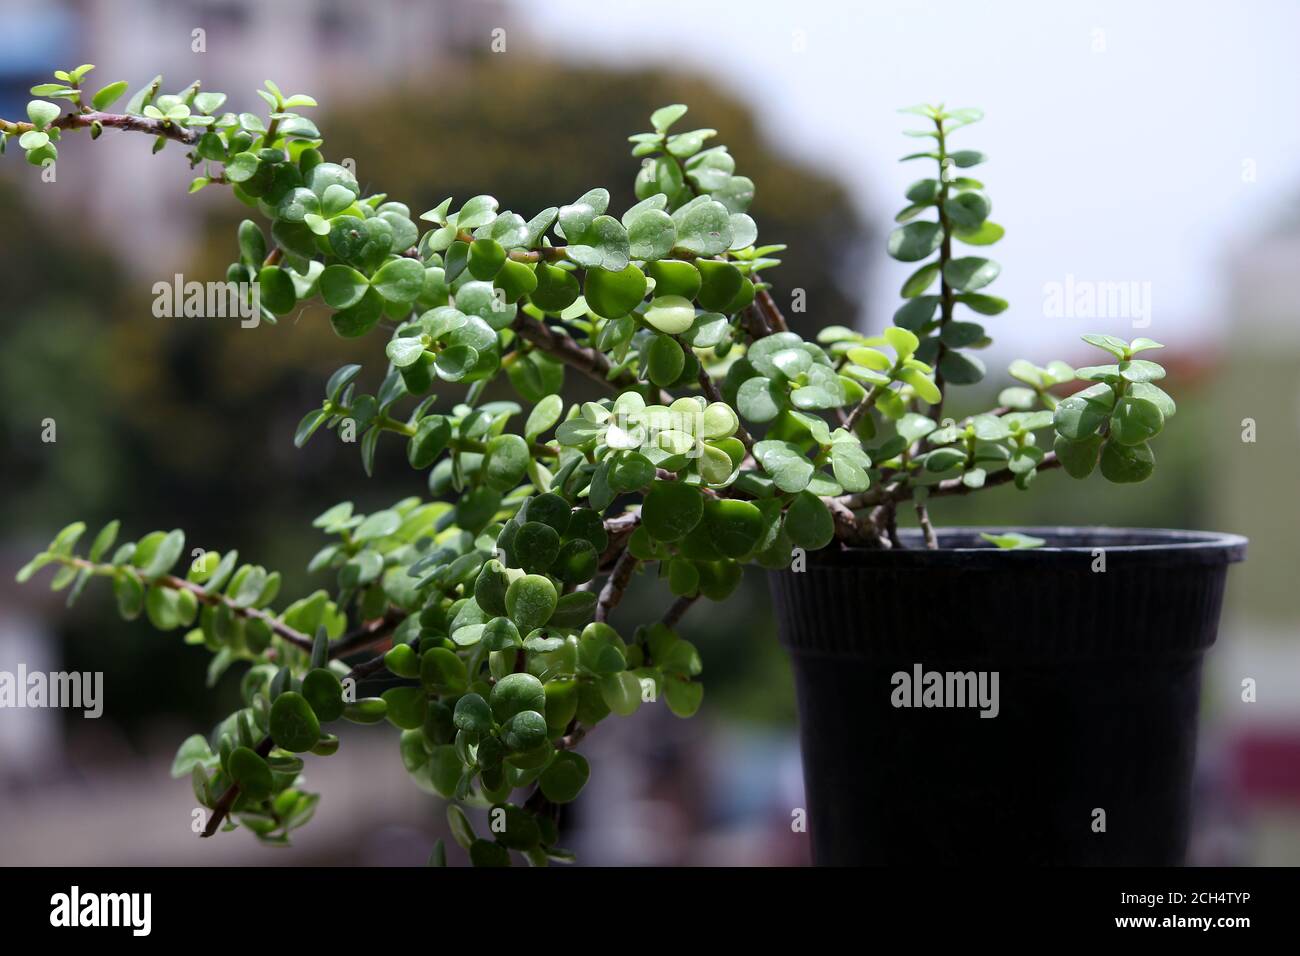 jade plant, crassula plant. Money plants with juicy leaves. Home decorative potted plants. Stock Photo